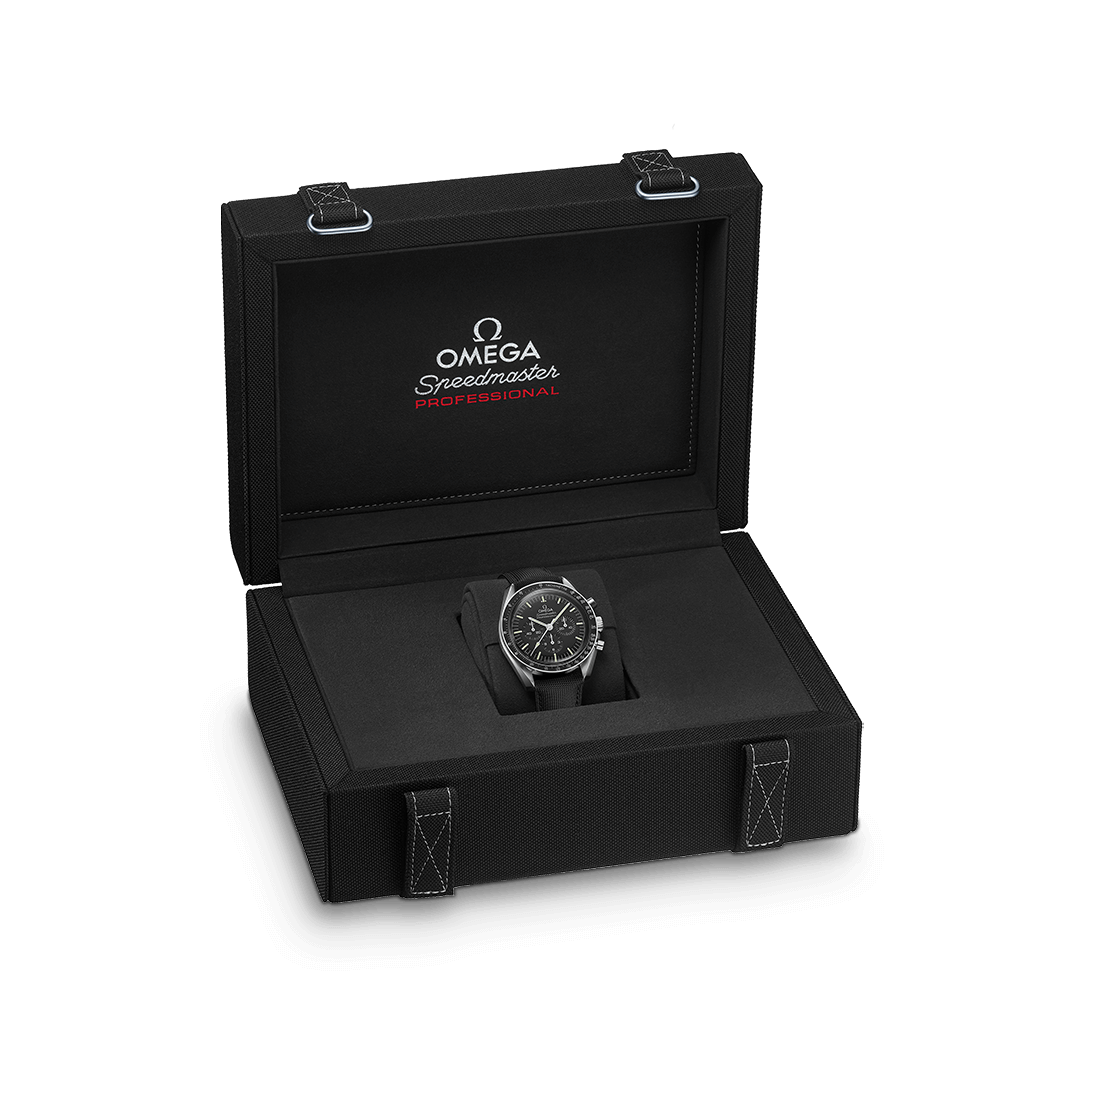 OMEGA Speedmaster Moonwatch Professional Master Chronometer Chronograph 42mm, model #310.32.42.50.01.001, at IJL Since 1937